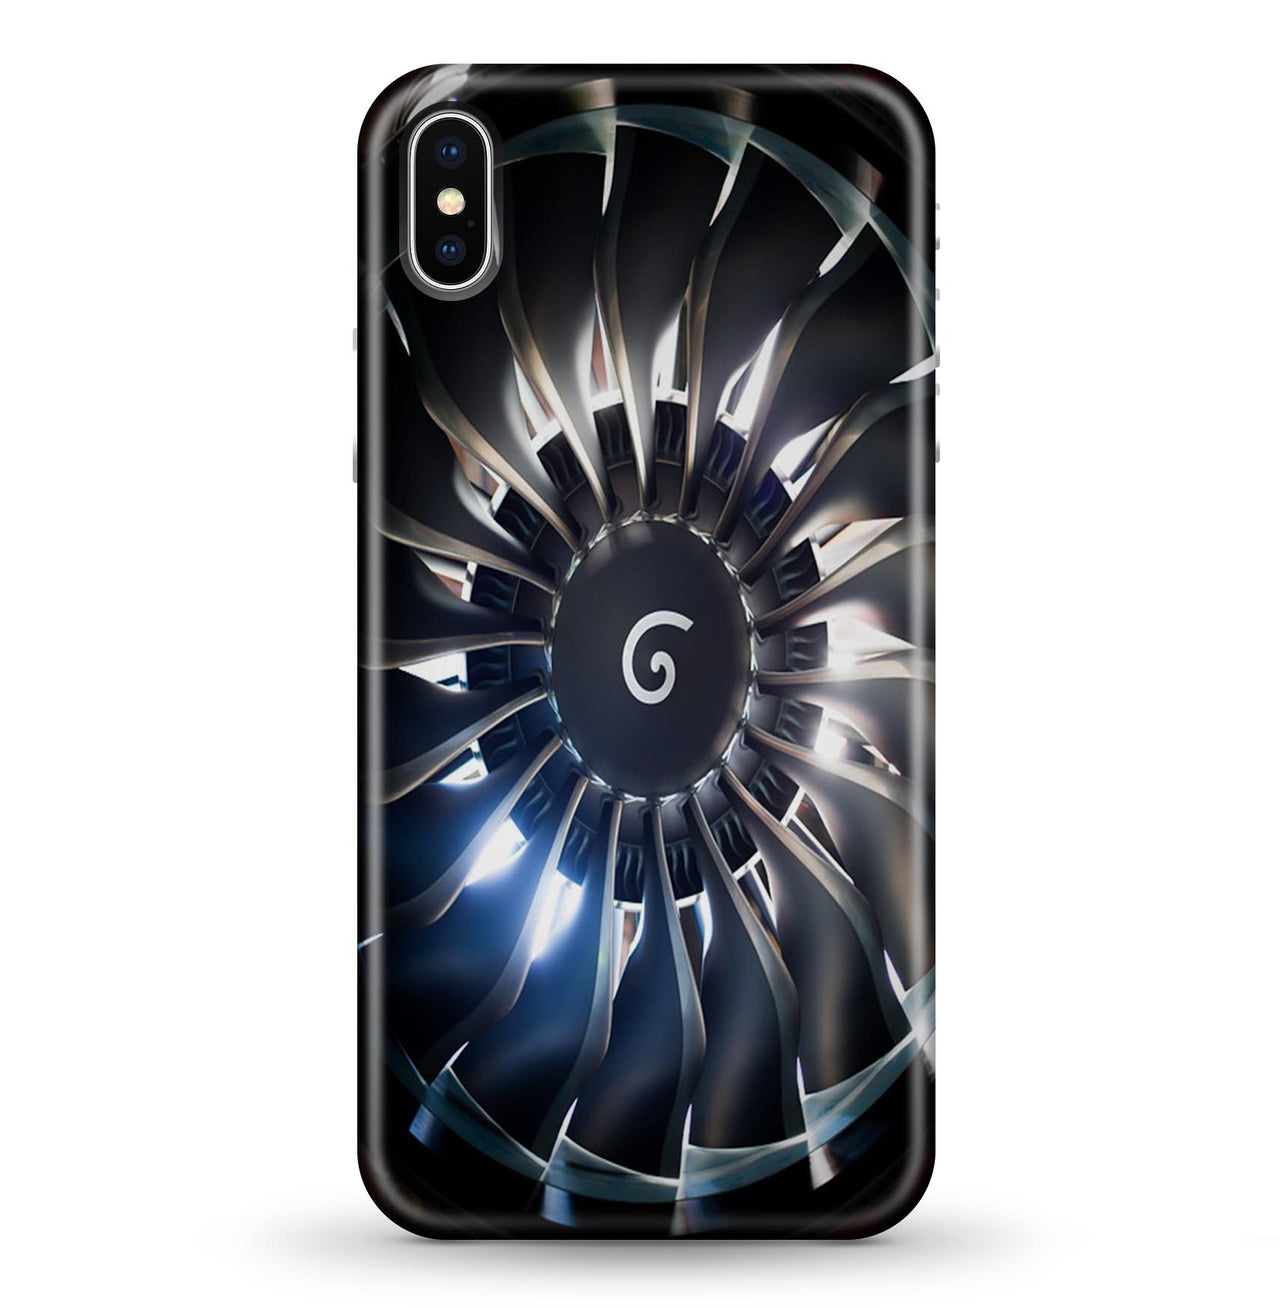 Amazing Jet Engine Printed iPhone Cases